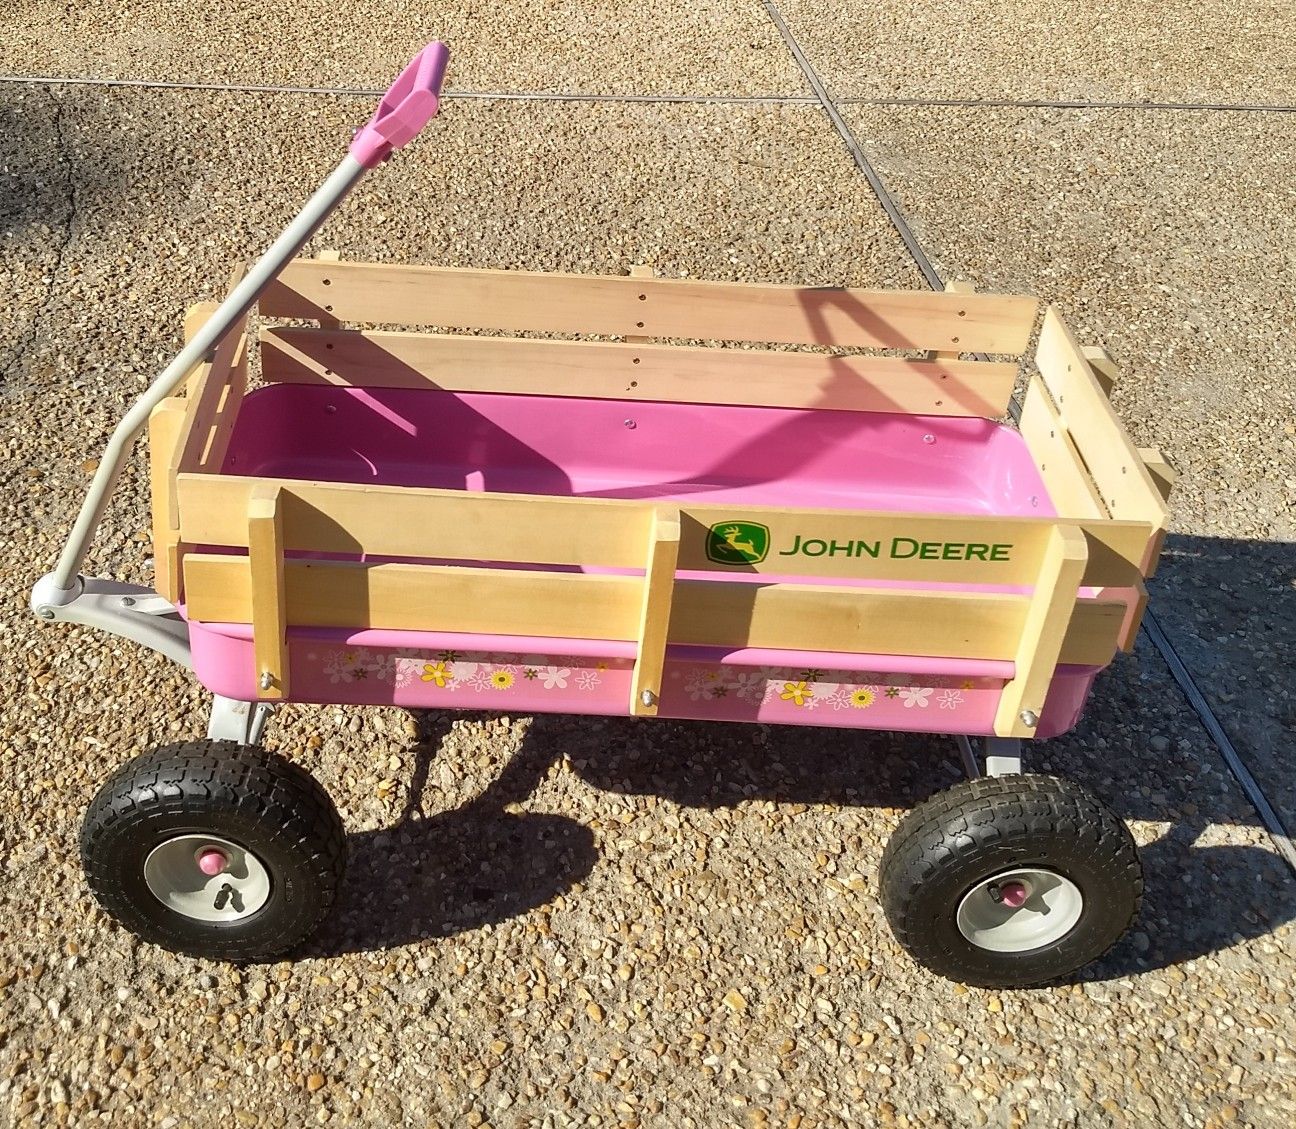 John Deere 36 inch wagon - Great Christmas gift